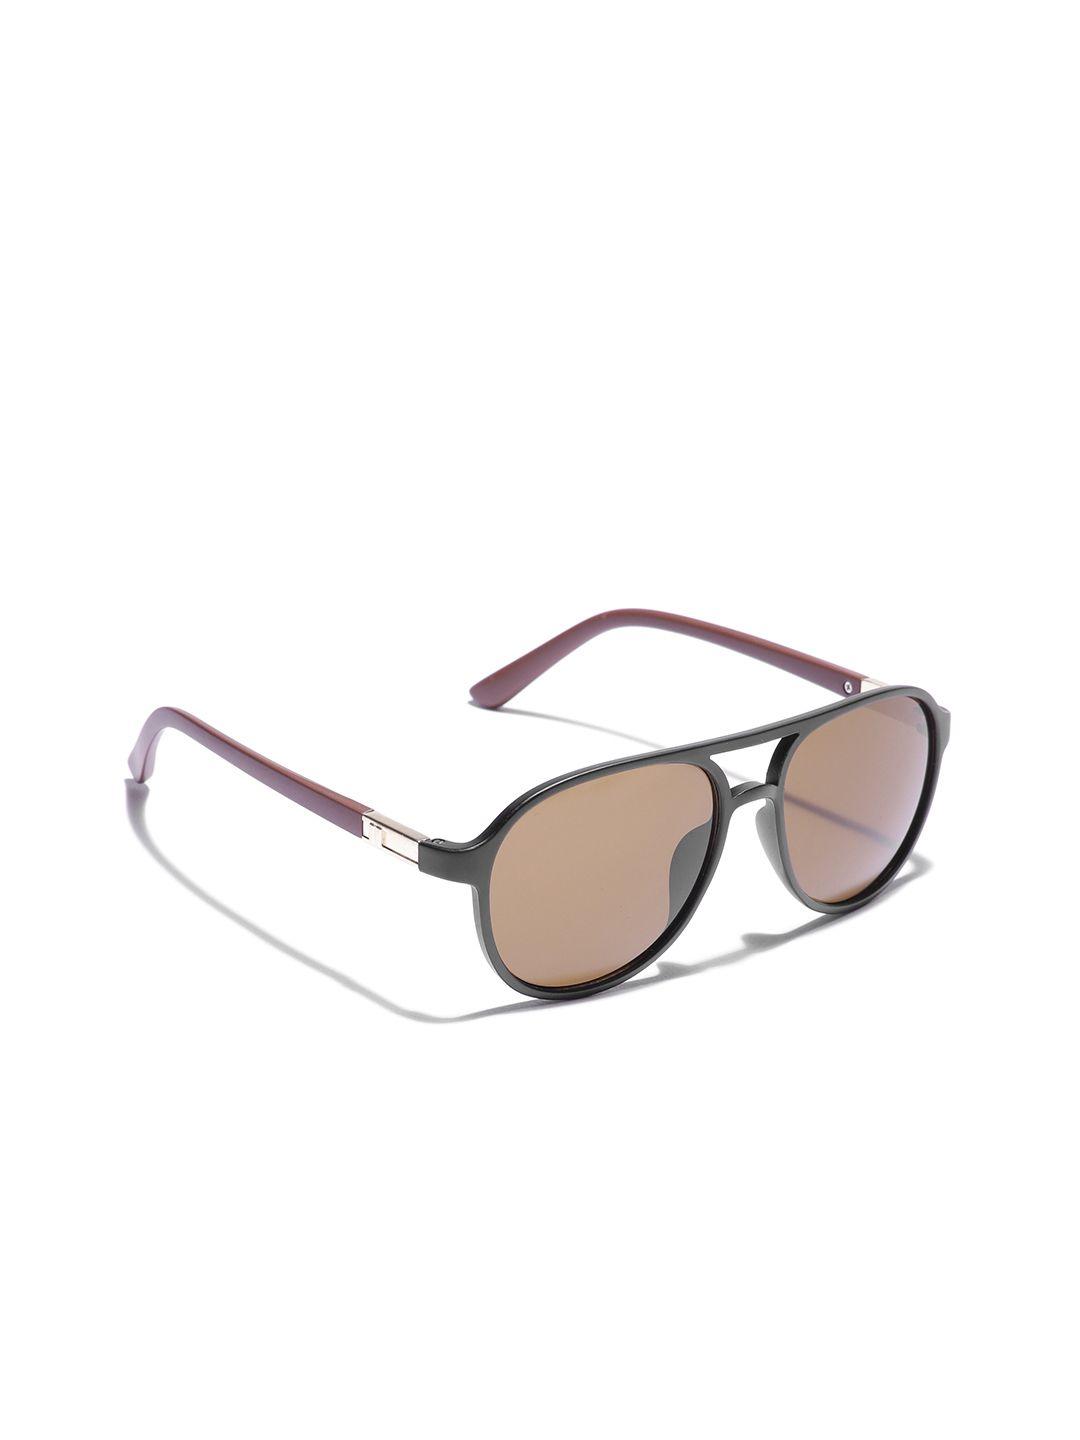 carlton london unisex brown lens & black rectangle sunglasses with uv protected lens